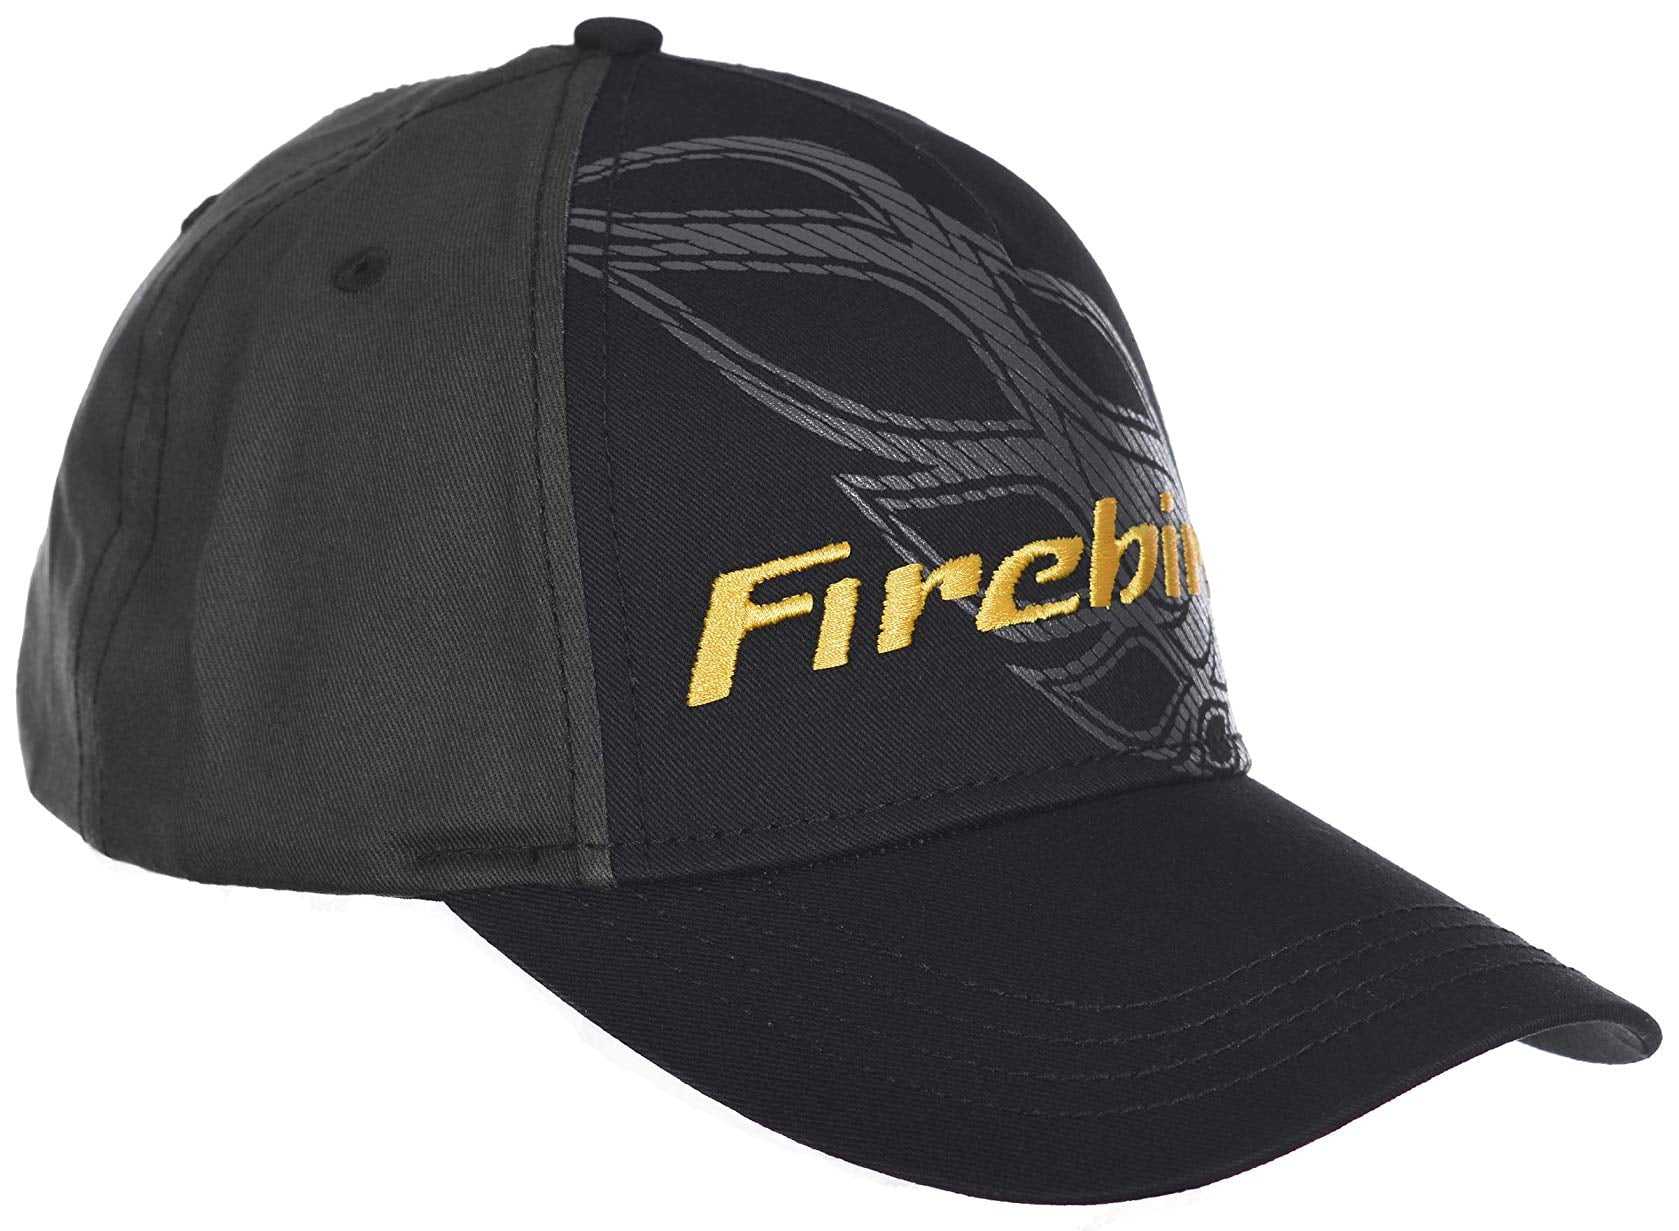 H3 Headwear Firebird Emblem Black & Charcoal Gray Adjustable Cap 